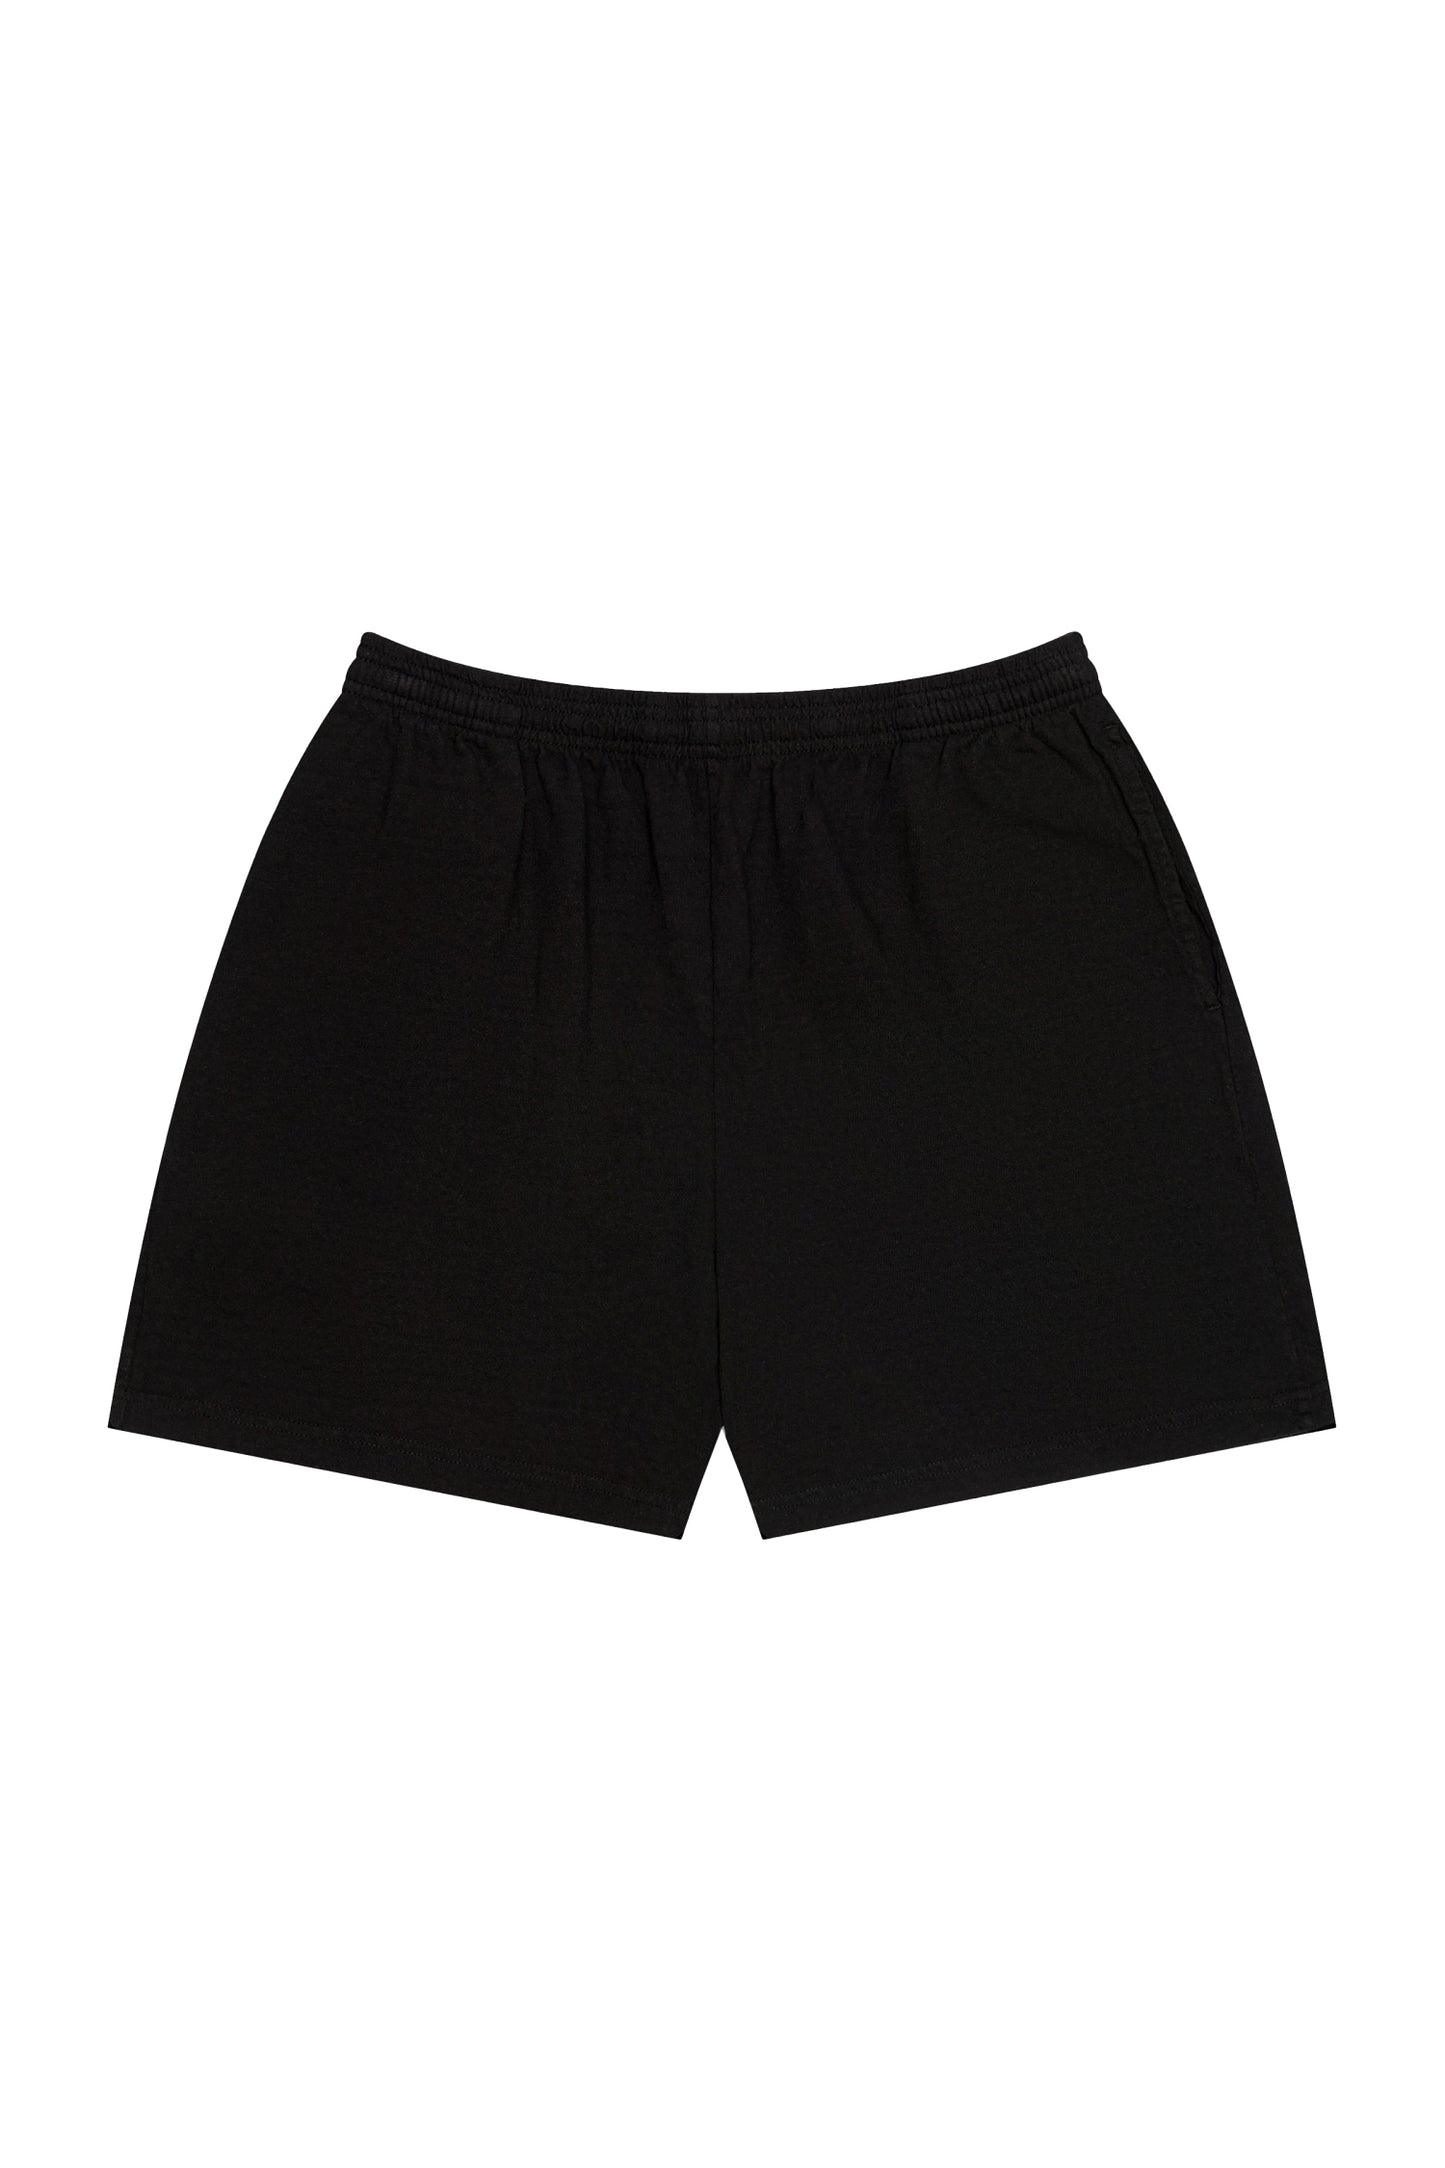 Everyday Shorts (Sample)